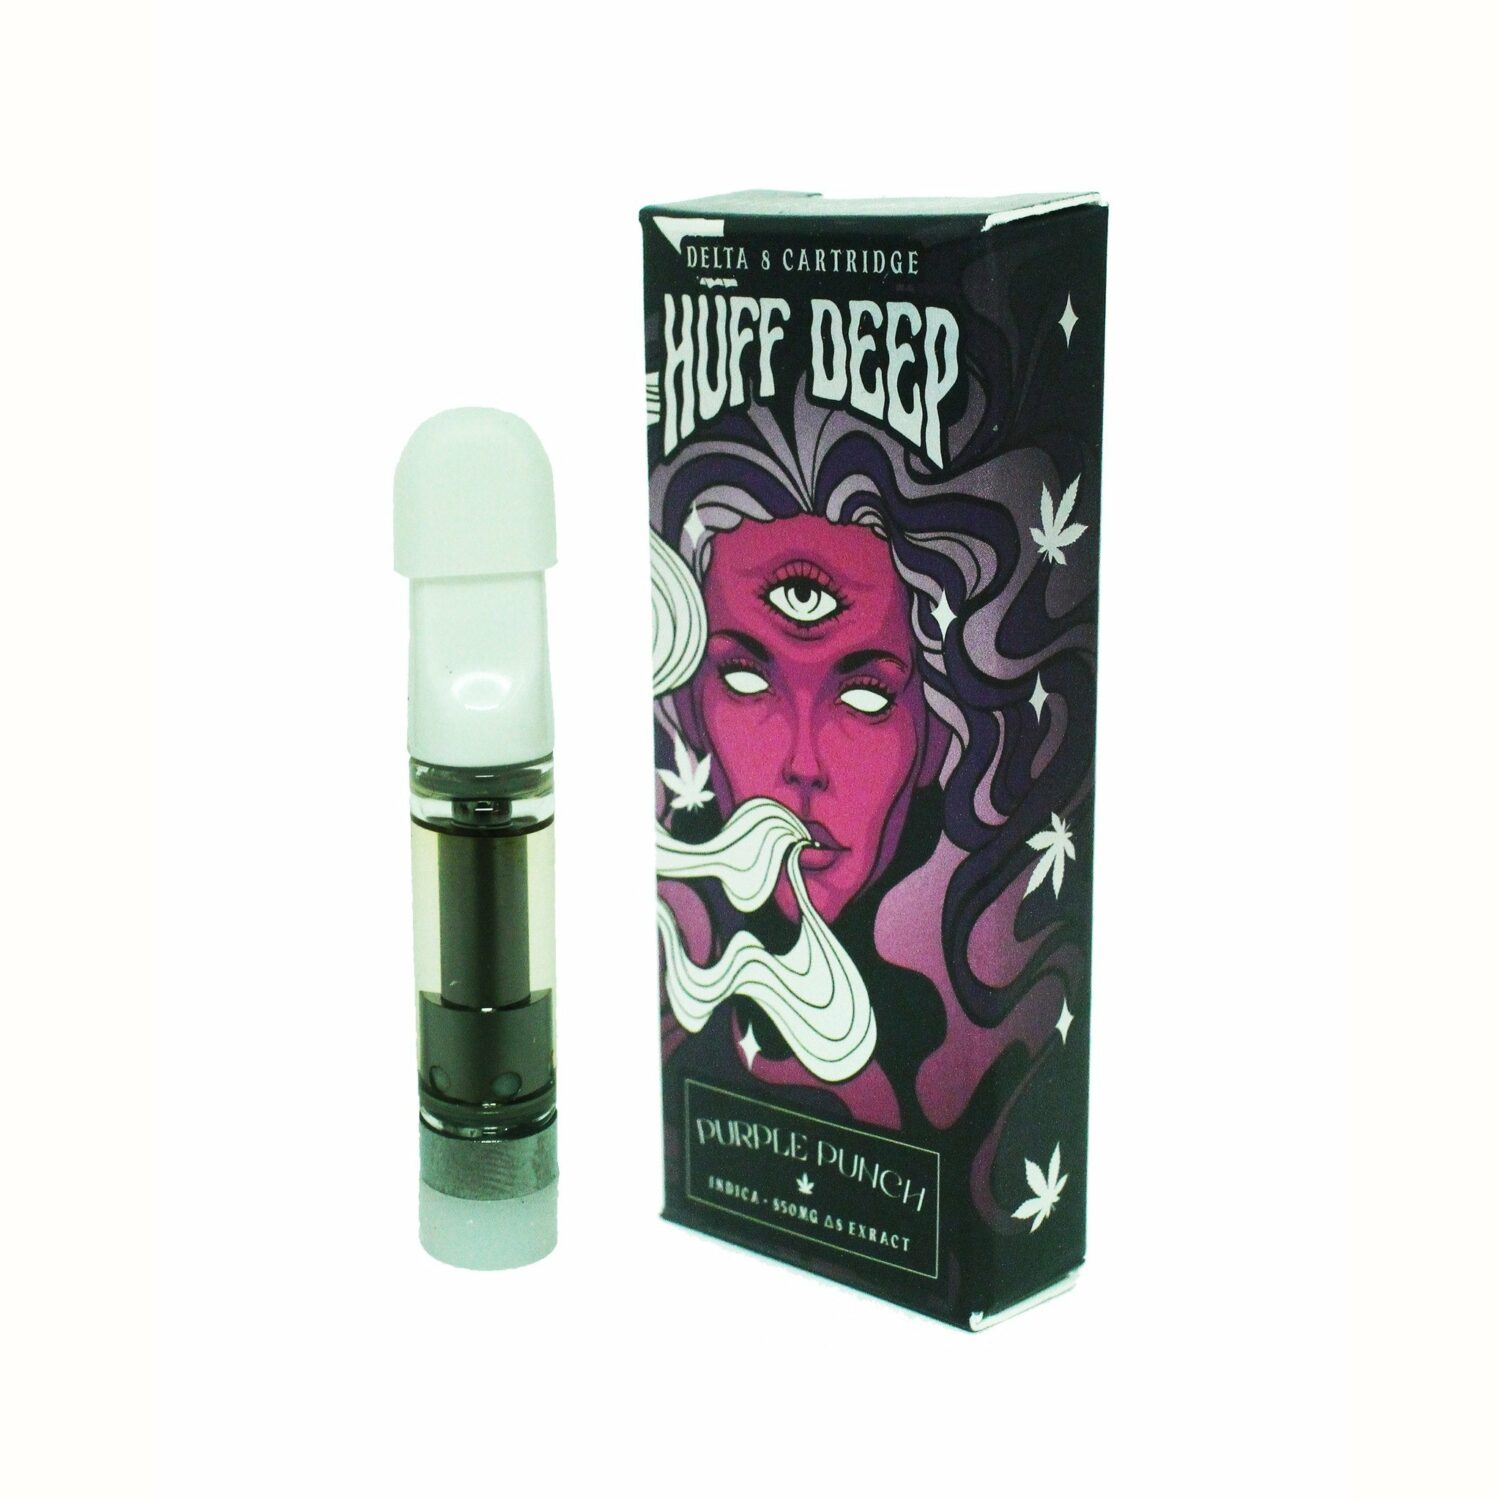 Huff-Deep-Delta-8-Cartridge-Purple-Punch-scaled-1.jpg